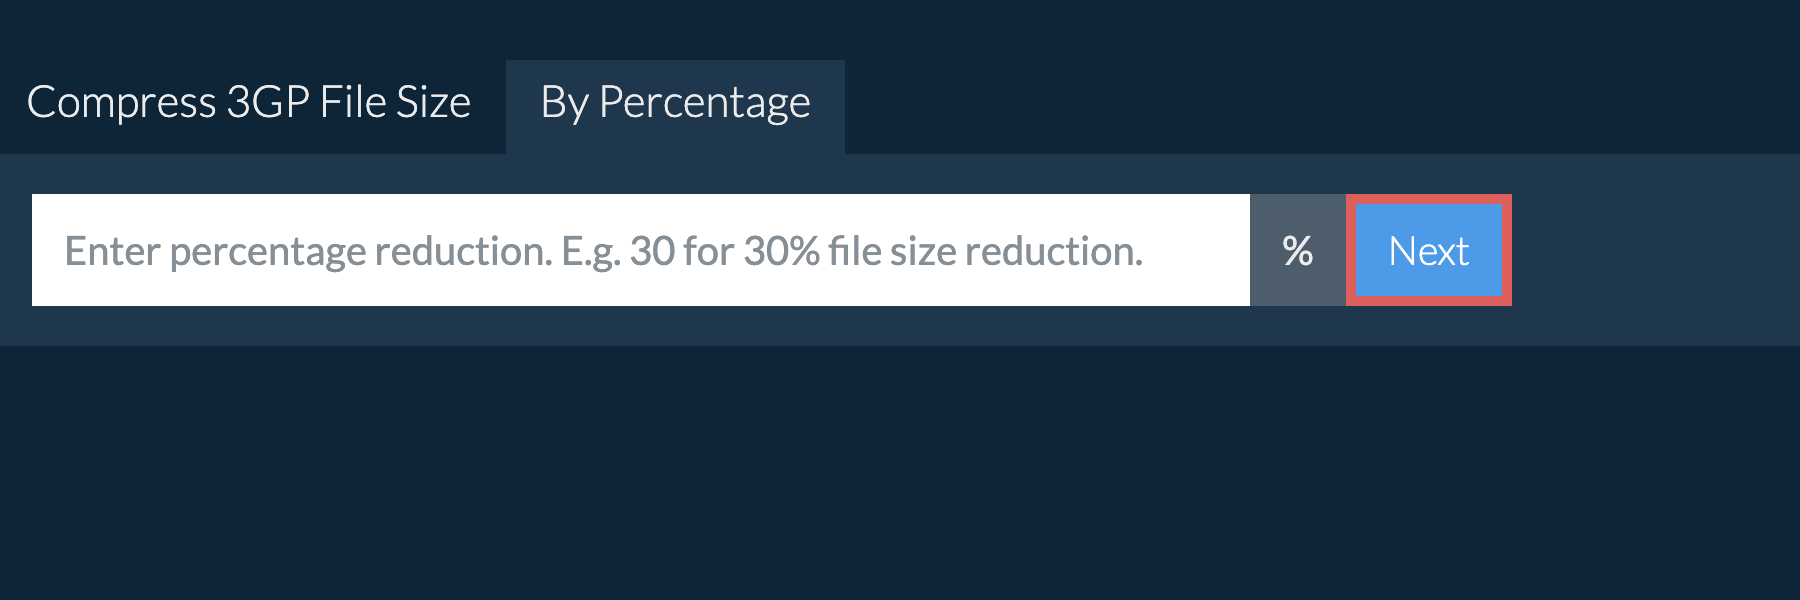 Reduce 3gp By Percentage